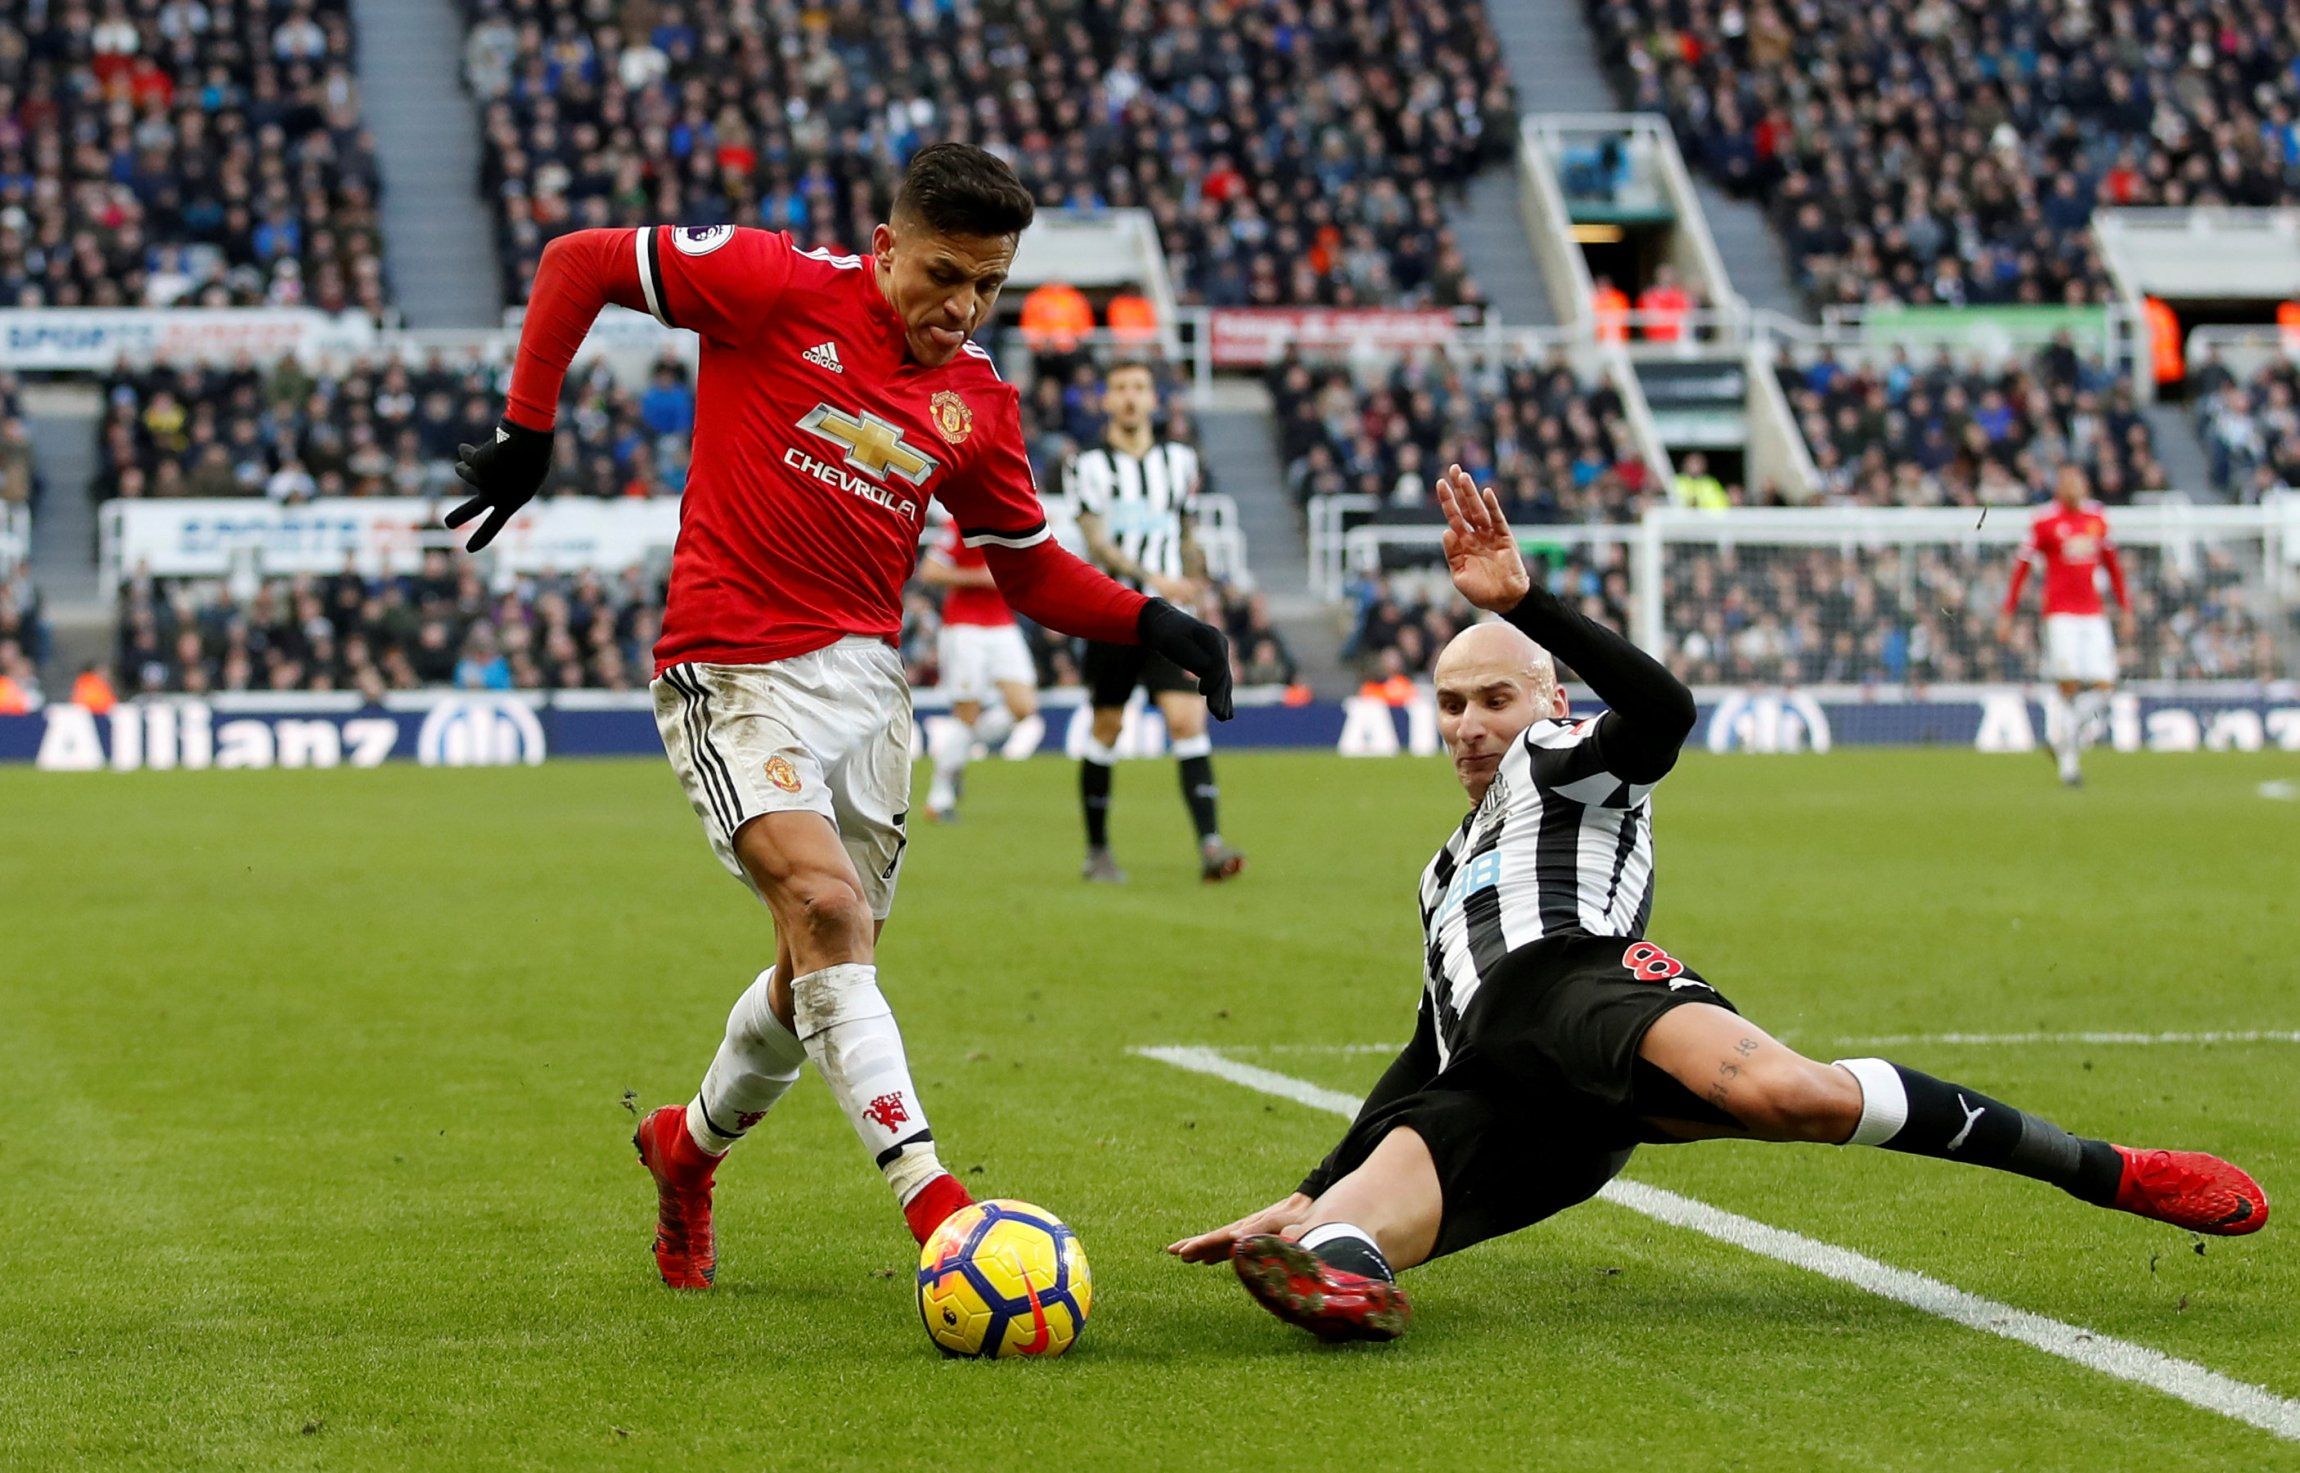 Newcastle midfielder Jonjo Shelvey tackles Alexis Sanchez